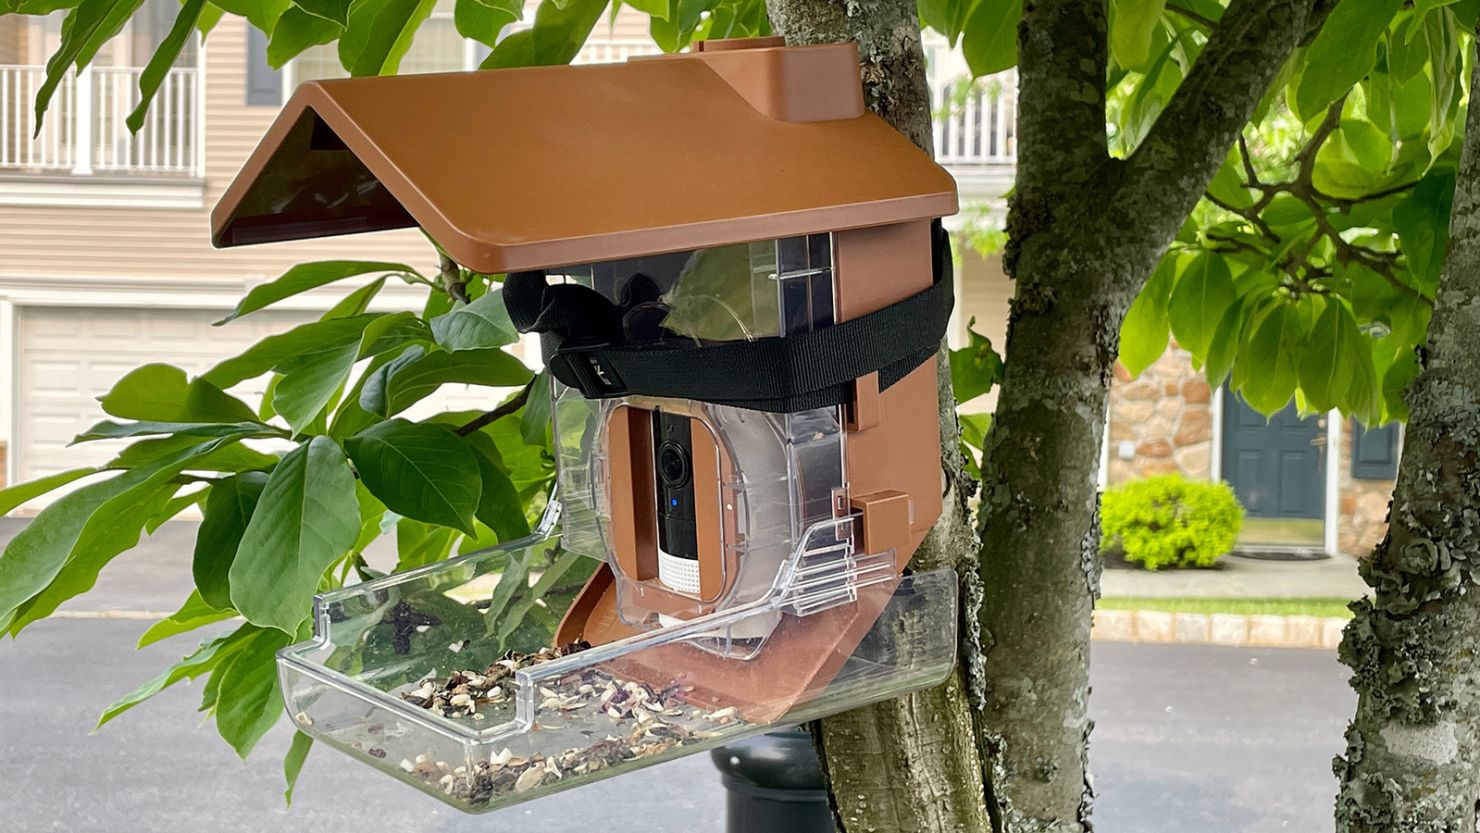 Smart Bird Feeder Lite Motion Detection Bird Home Feeder Security Came